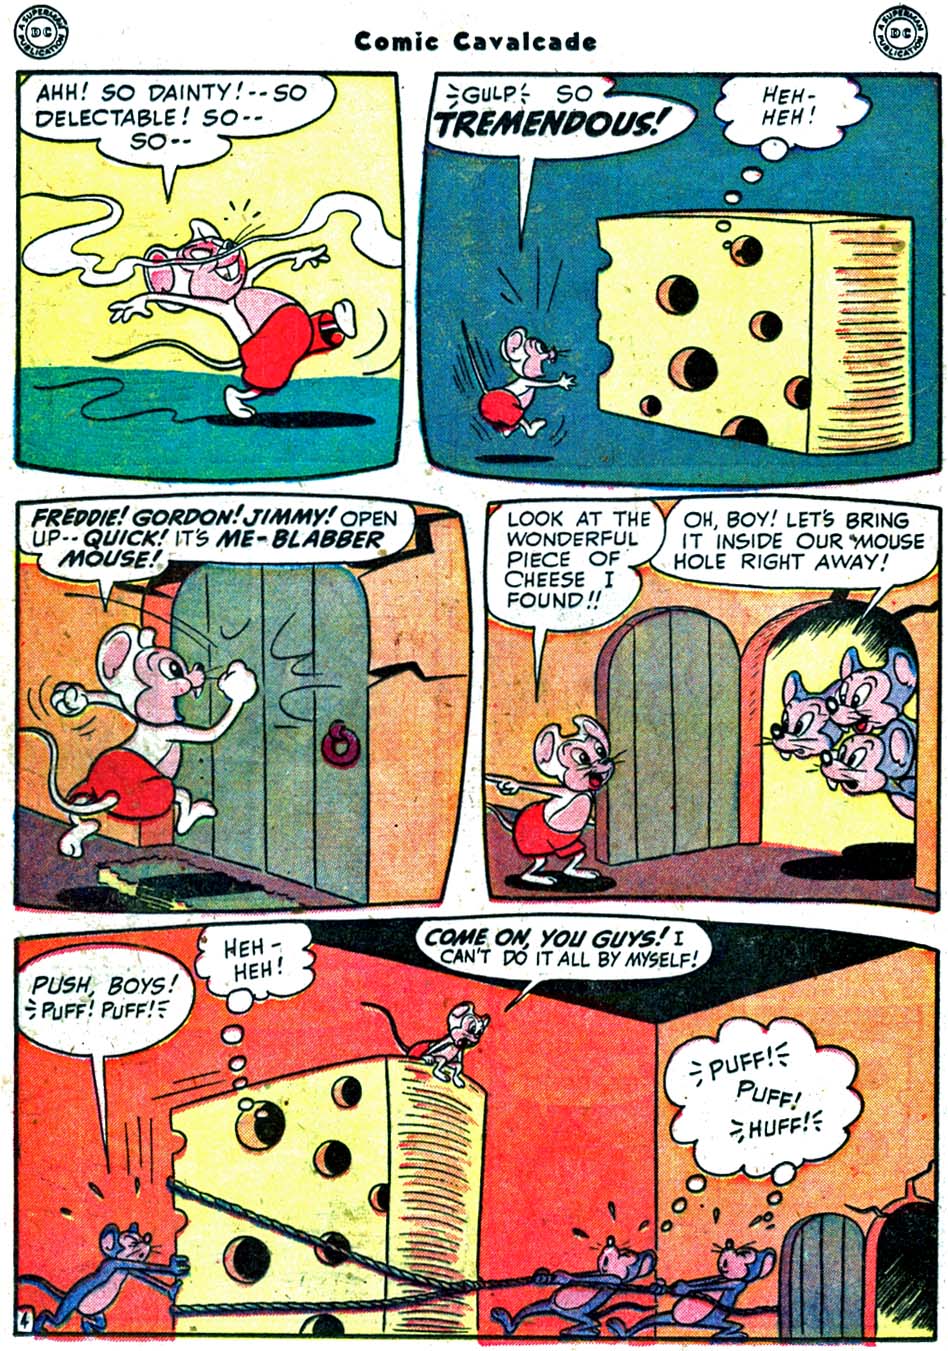 Comic Cavalcade issue 32 - Page 16